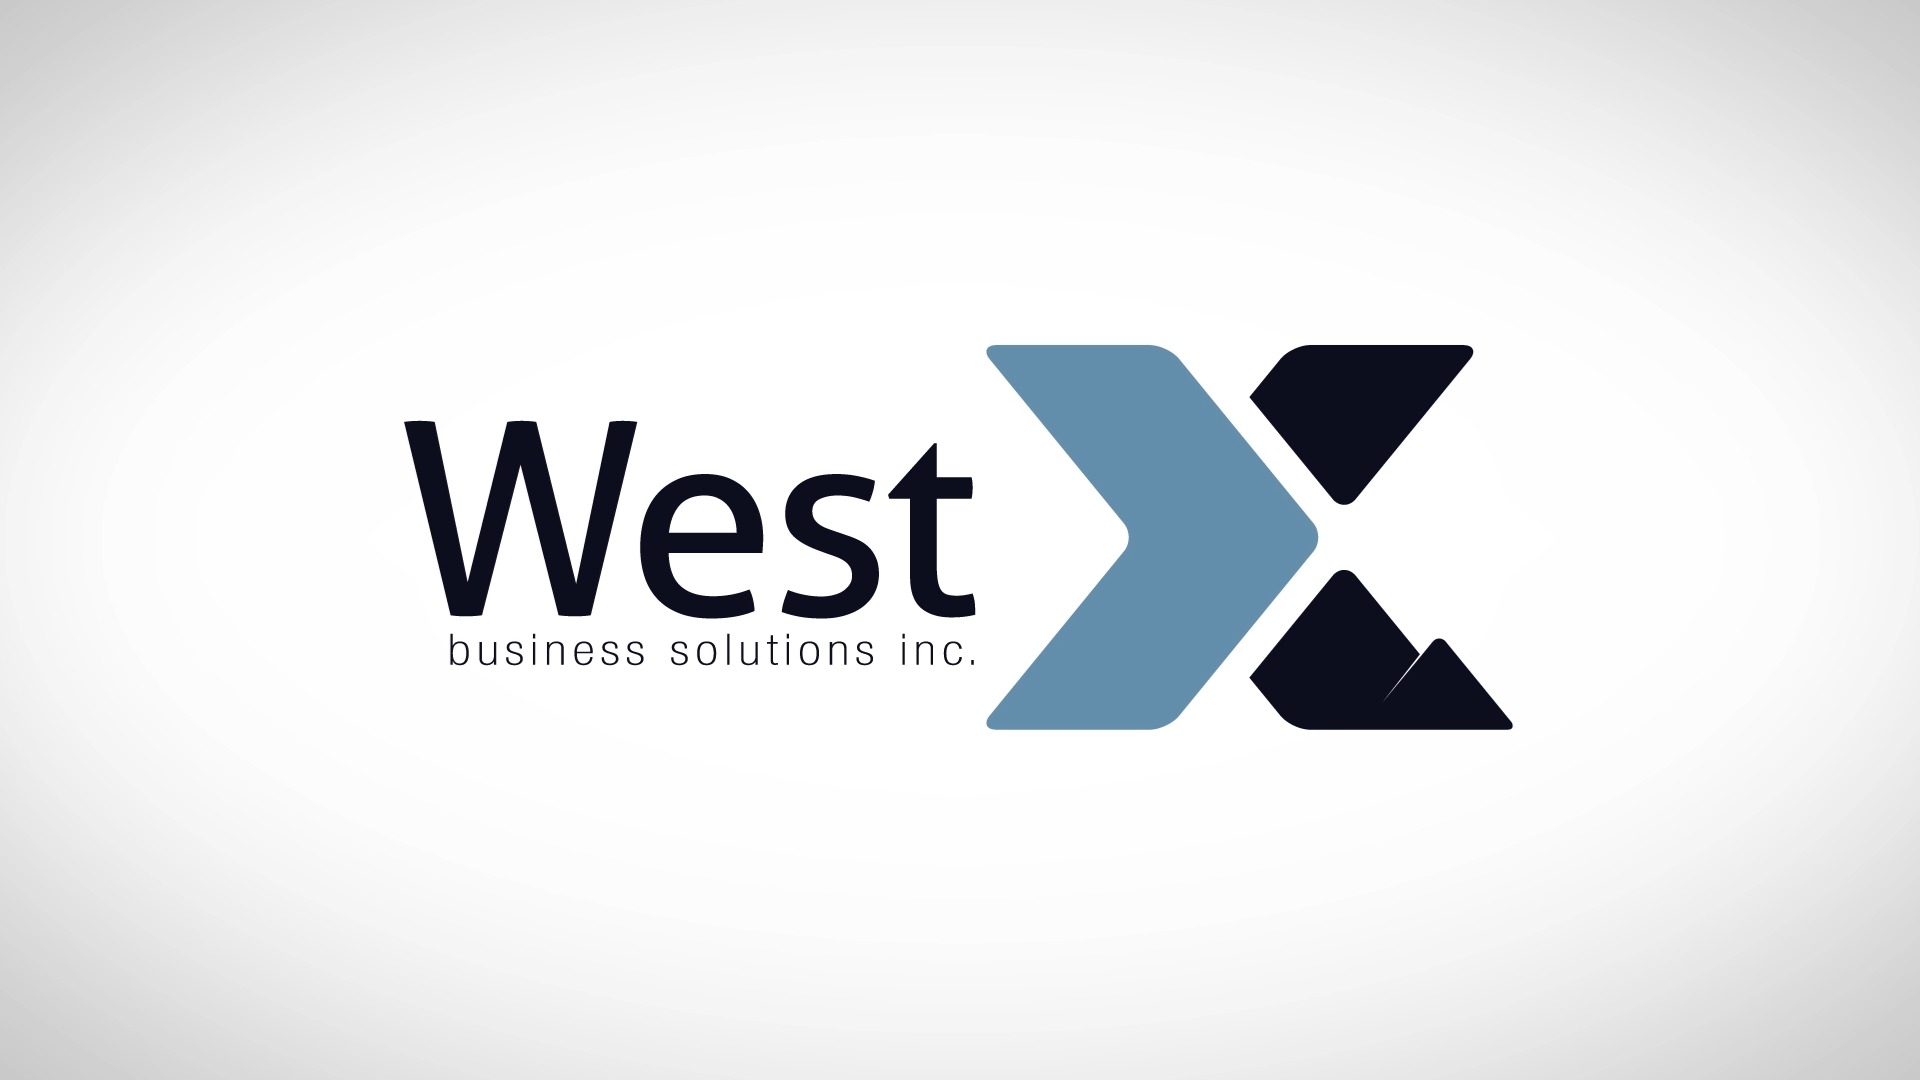 WestX Logo Animation